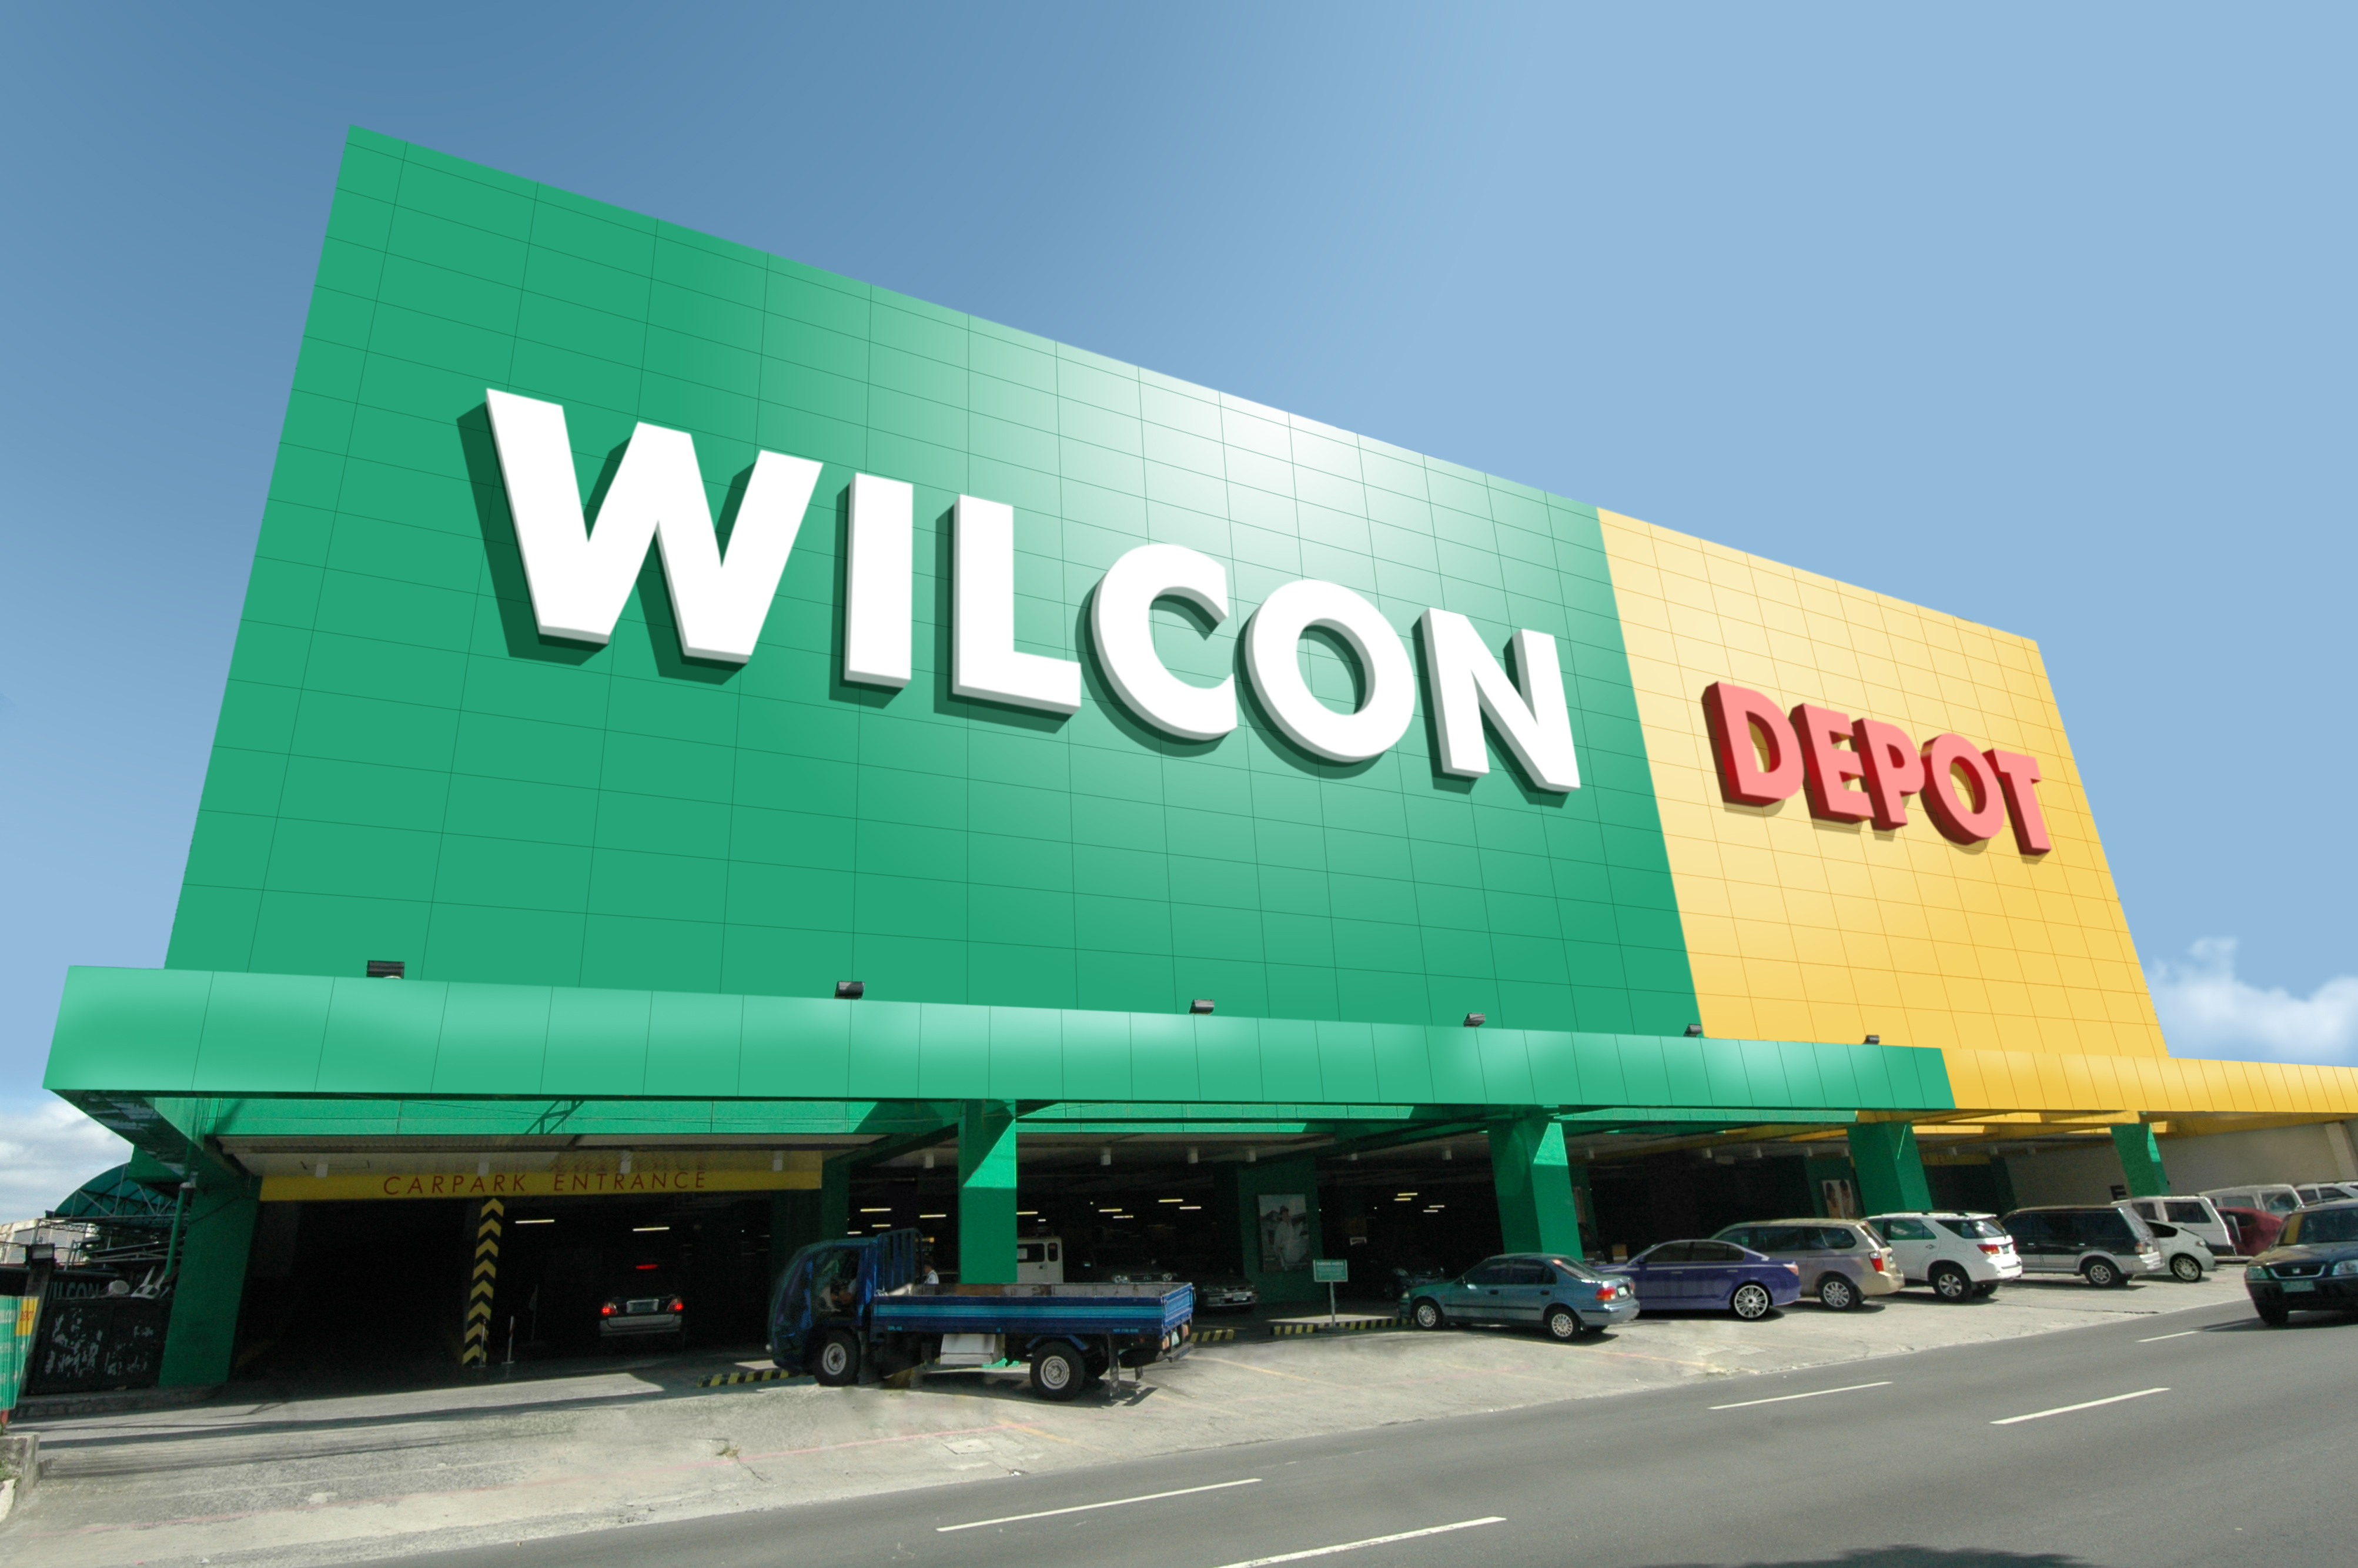 Wilcon Depot beefs up e-commerce presence